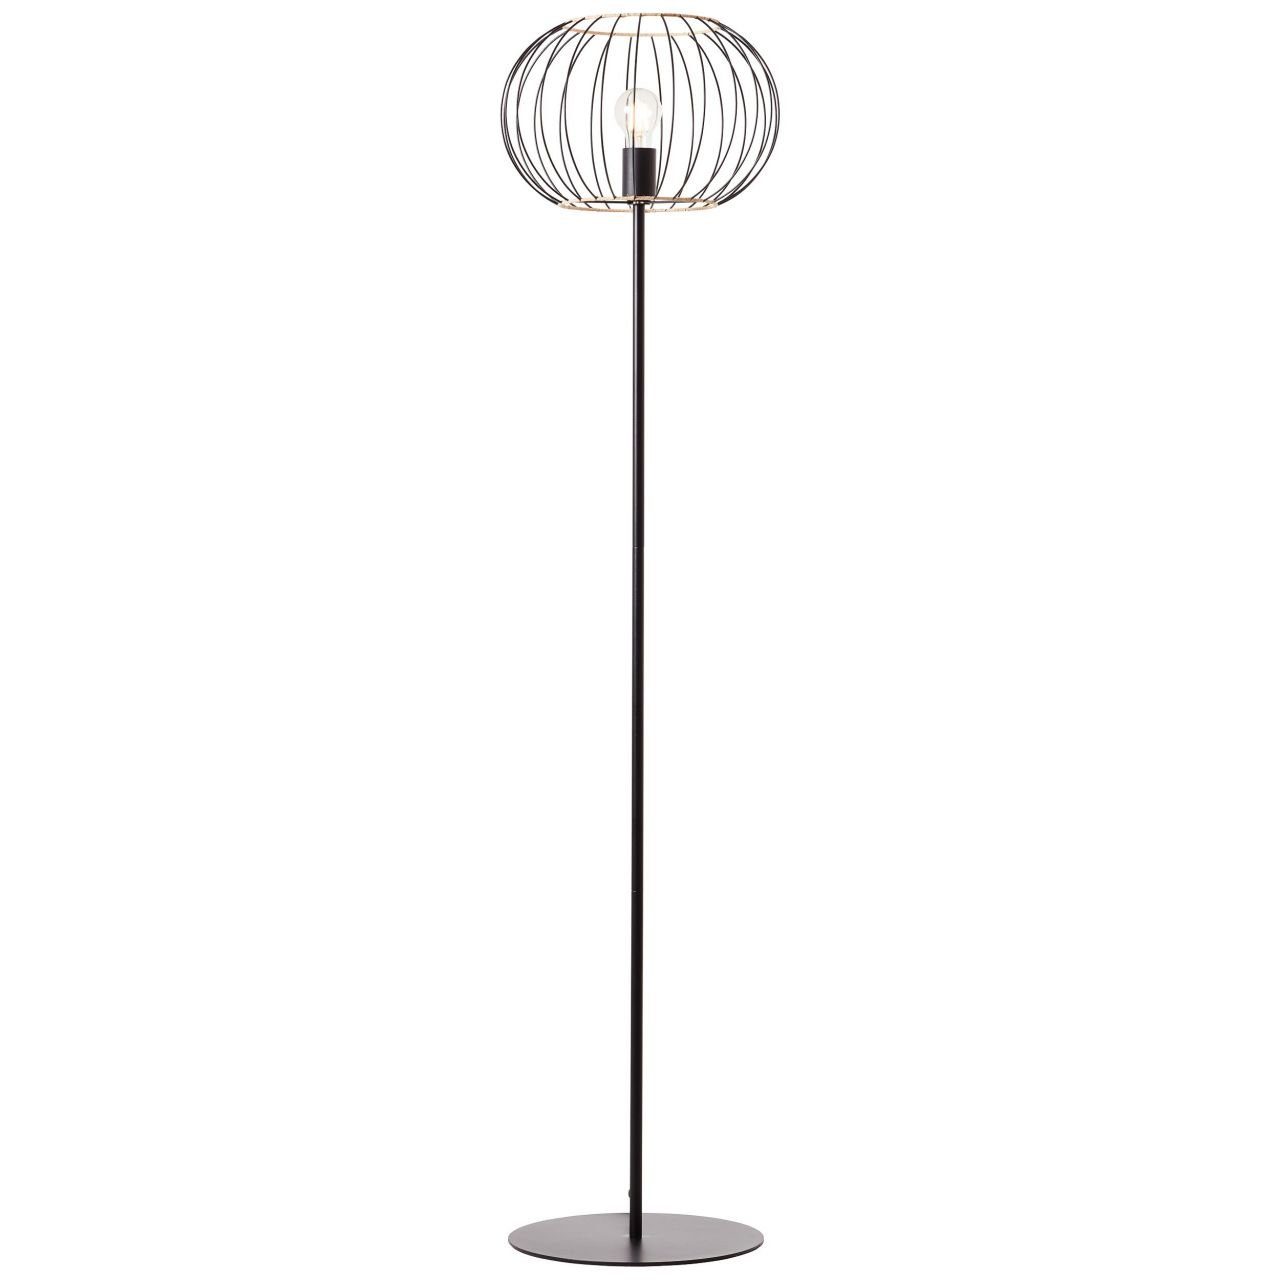 Brilliant Stehlampe Silemia, Lampe, 1x 1flg matt, E27, Mit schwarz Silemia Standleuchte A60, 52W, F